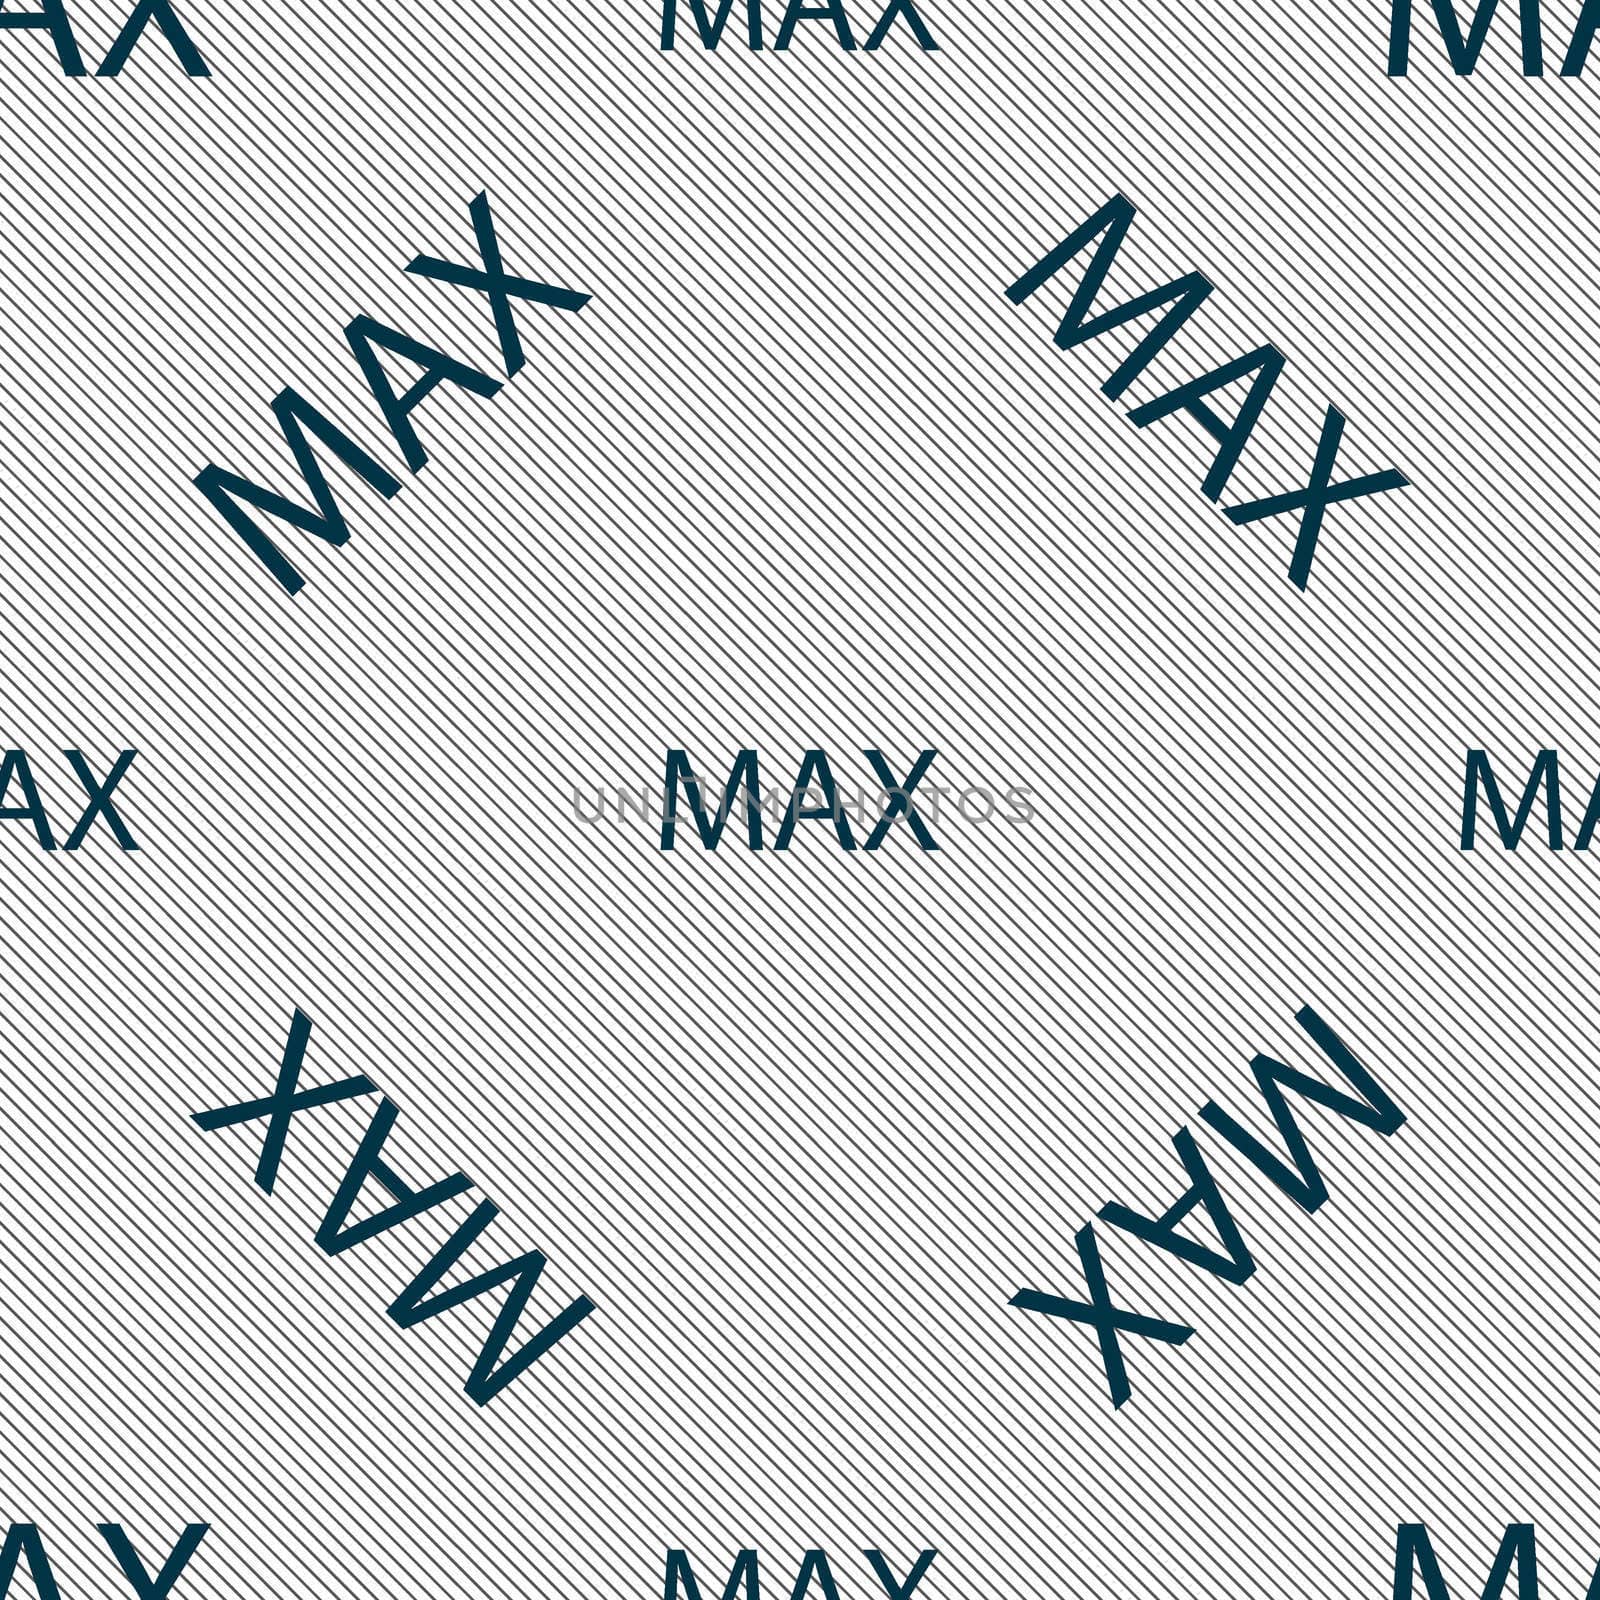 maximum sign icon. Seamless pattern with geometric texture. illustration